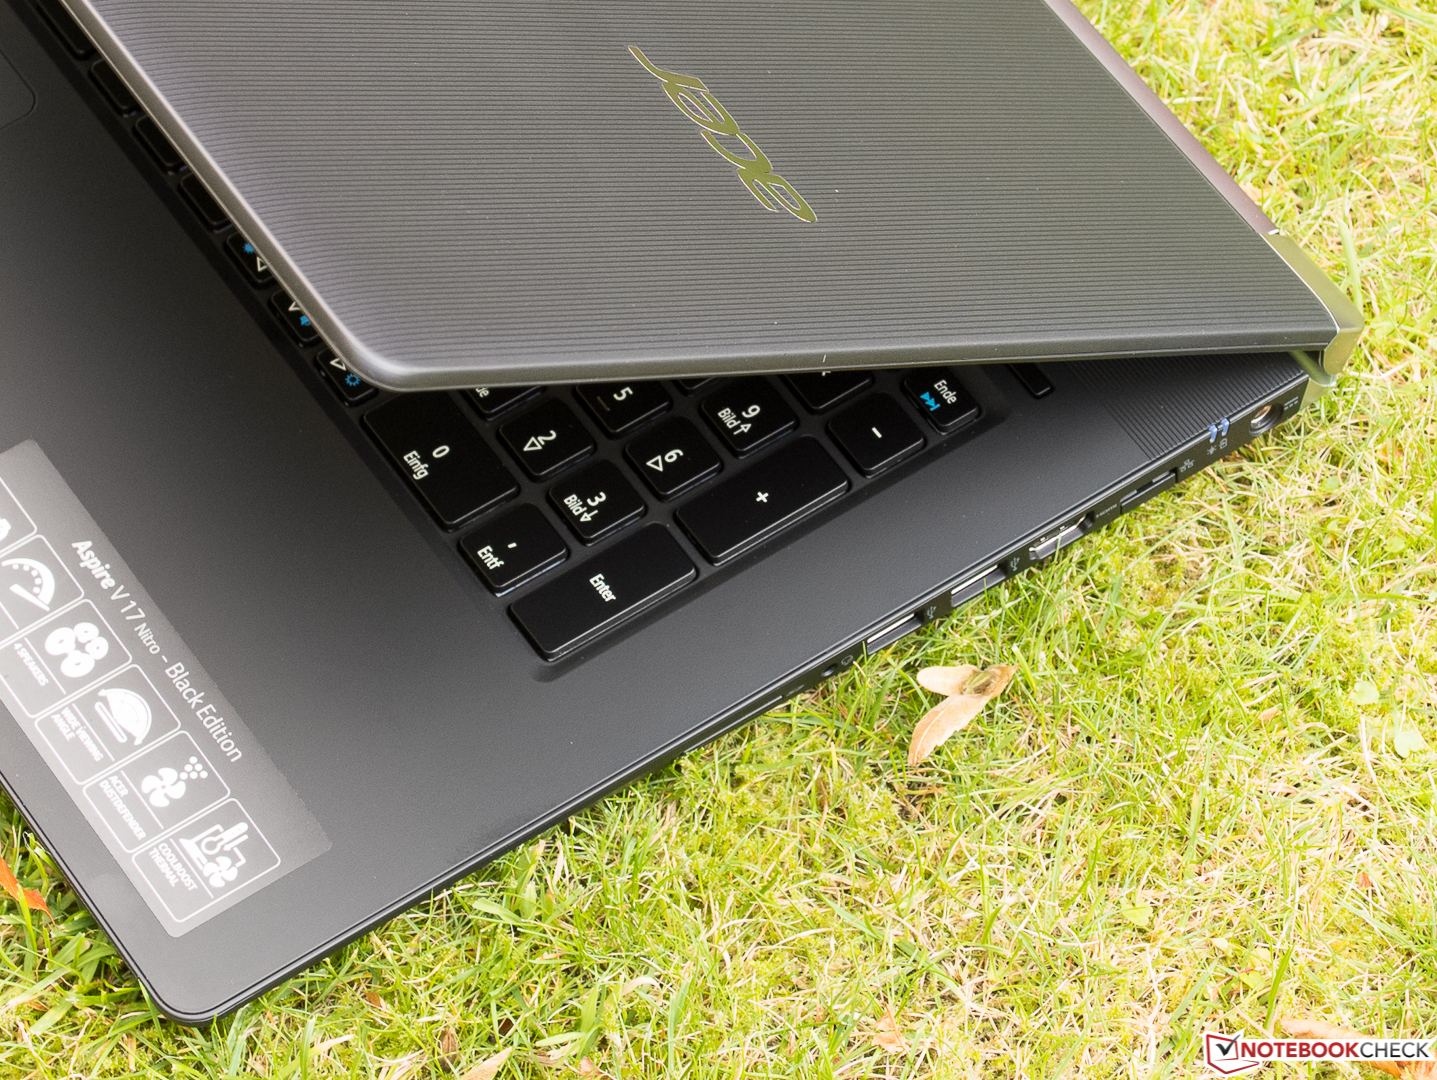 Acer Aspire V 17 Nitro VN7-792G-55SF Notebook Review